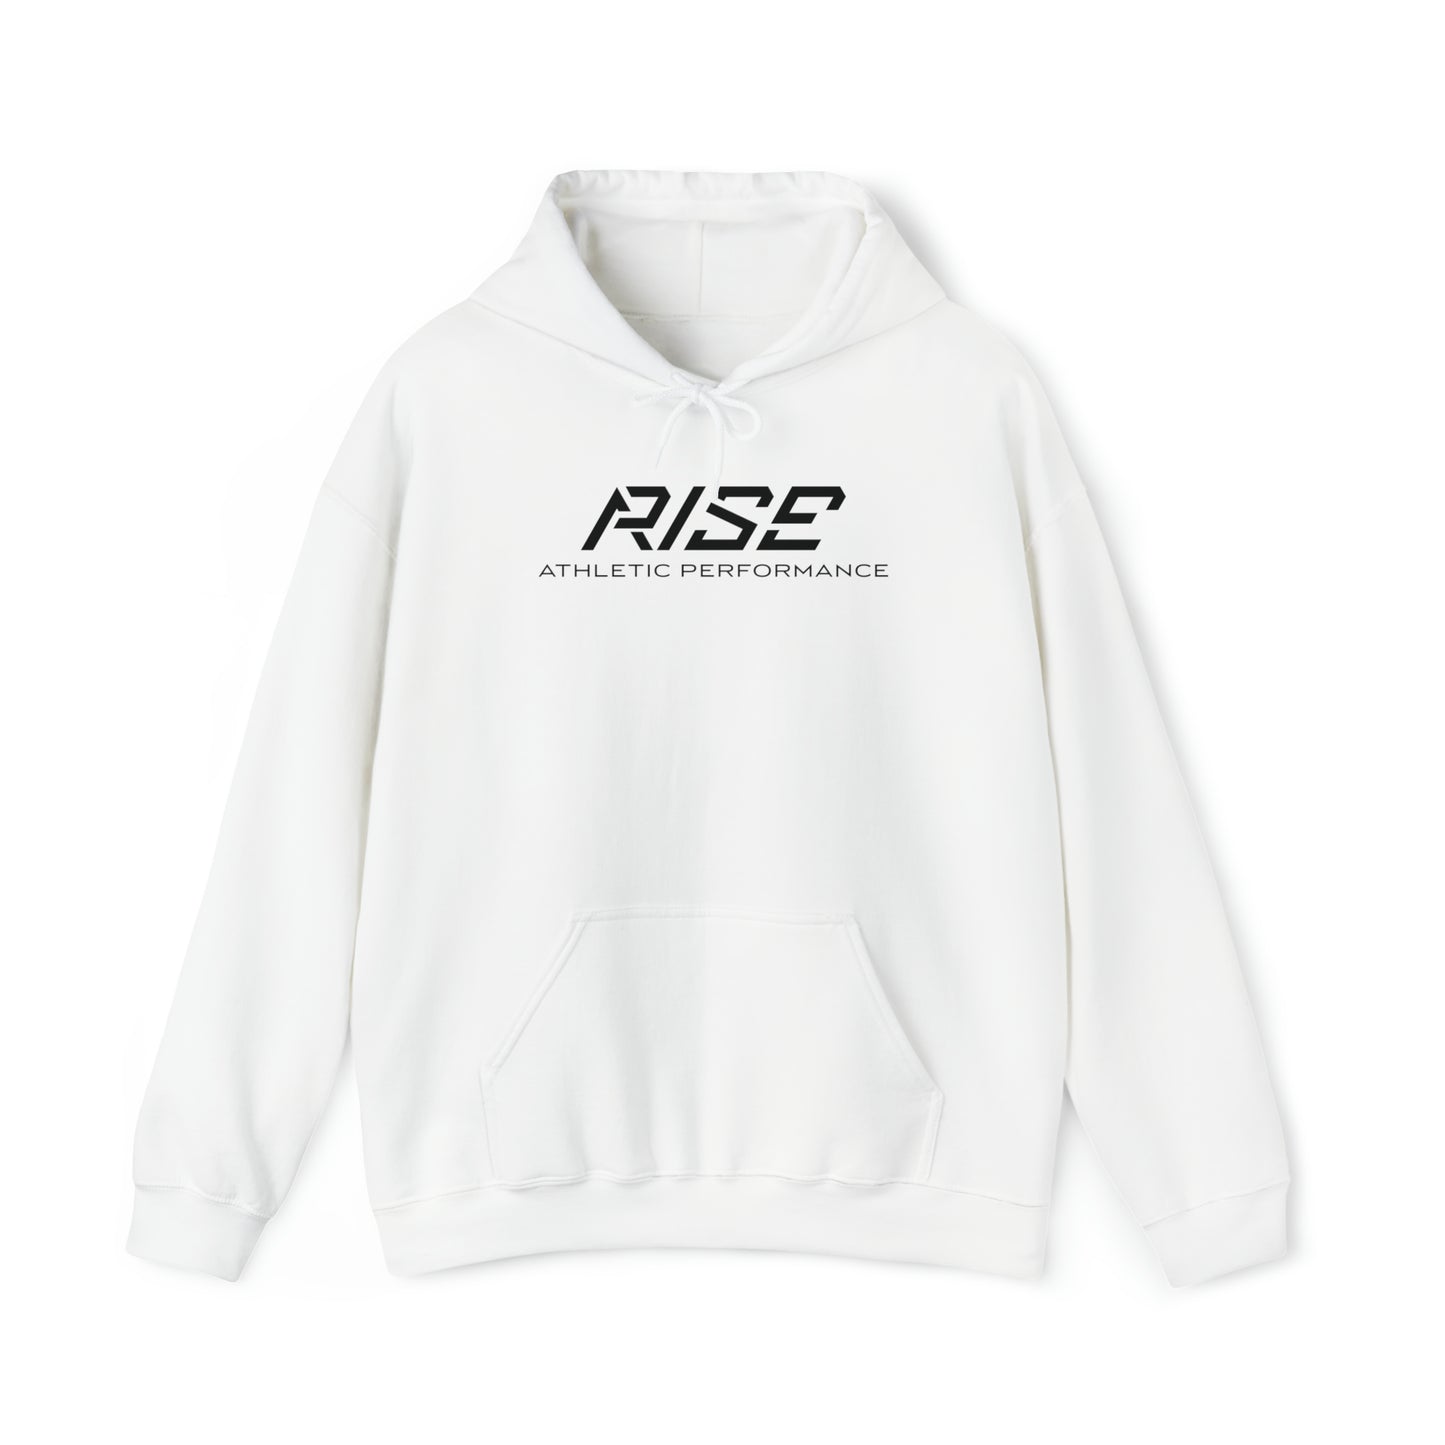 Rise Athletic Performance Hooded Sweatshirt